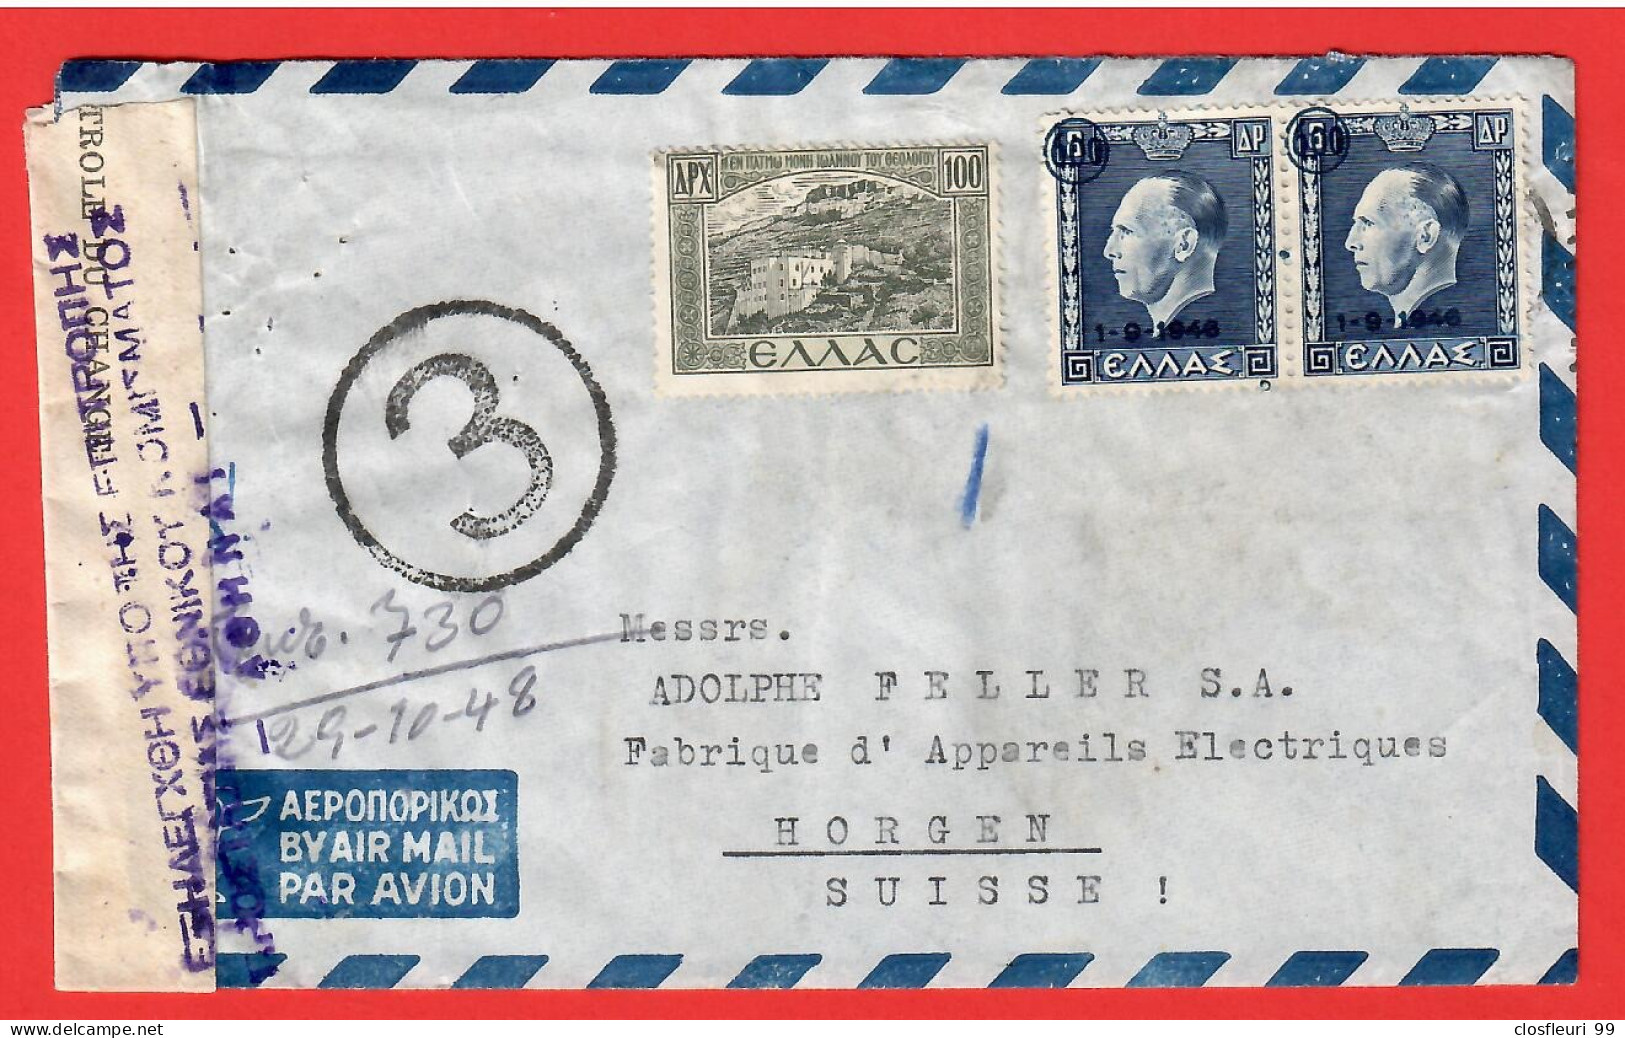 Censoir, Examined /Marque N°3 / Par Avion 29.10.48 /Timbre Surchargé 1-9-1946 / Horgen Switzerland - Postmarks - EMA (Printer Machine)